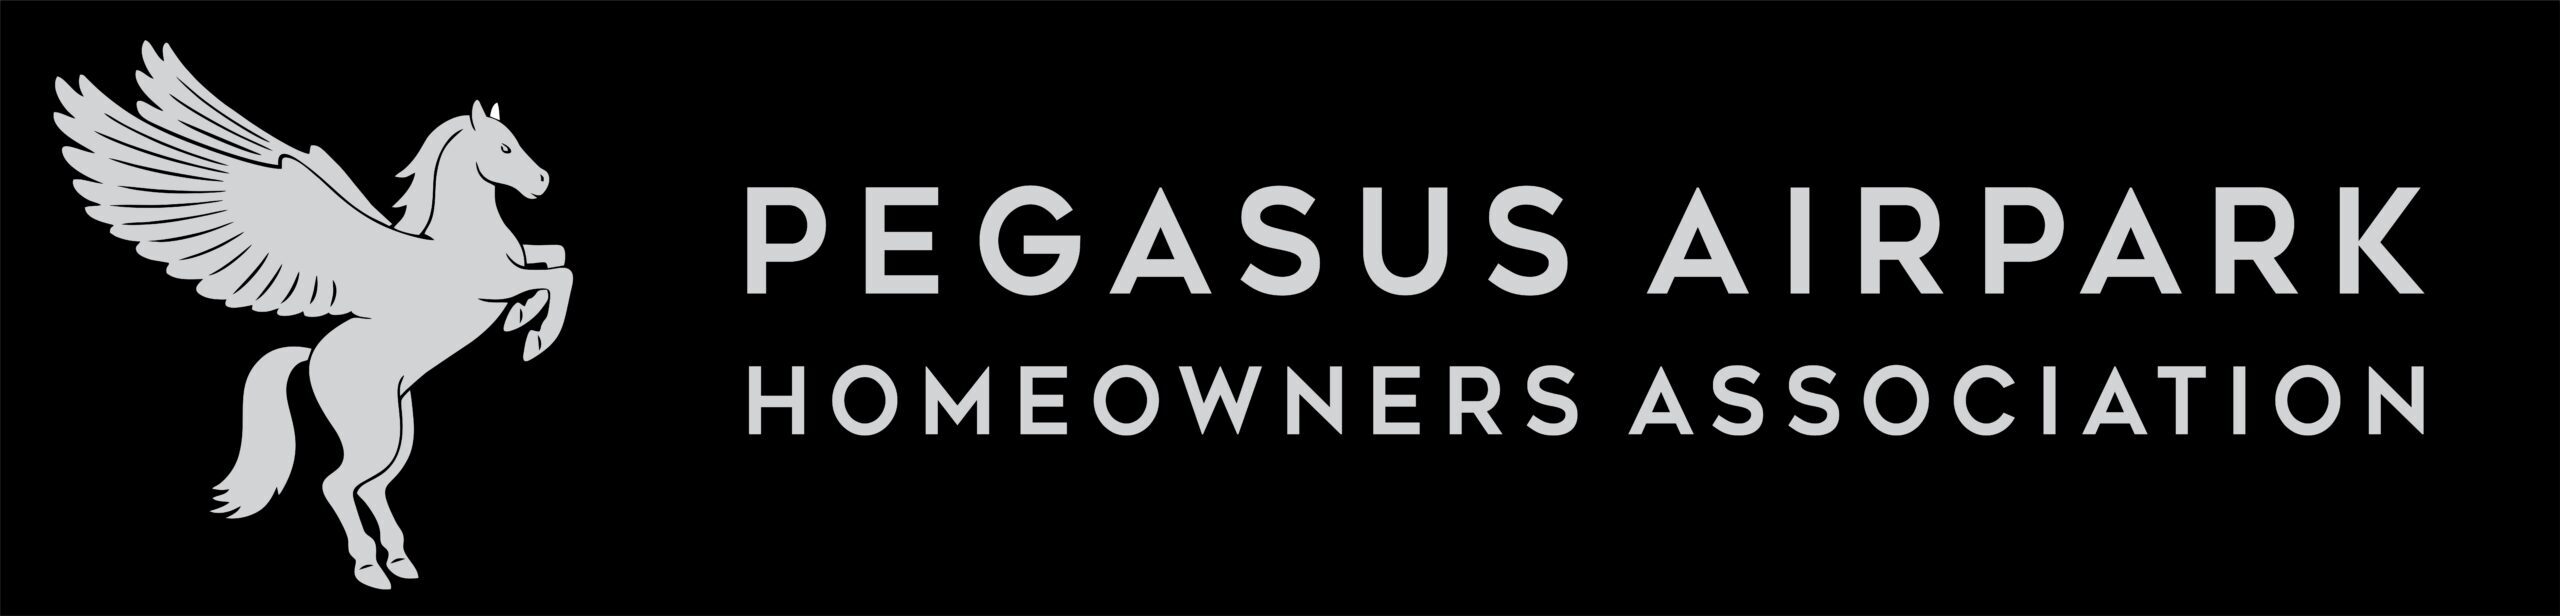 Pegasus Airpark Homeowners Association